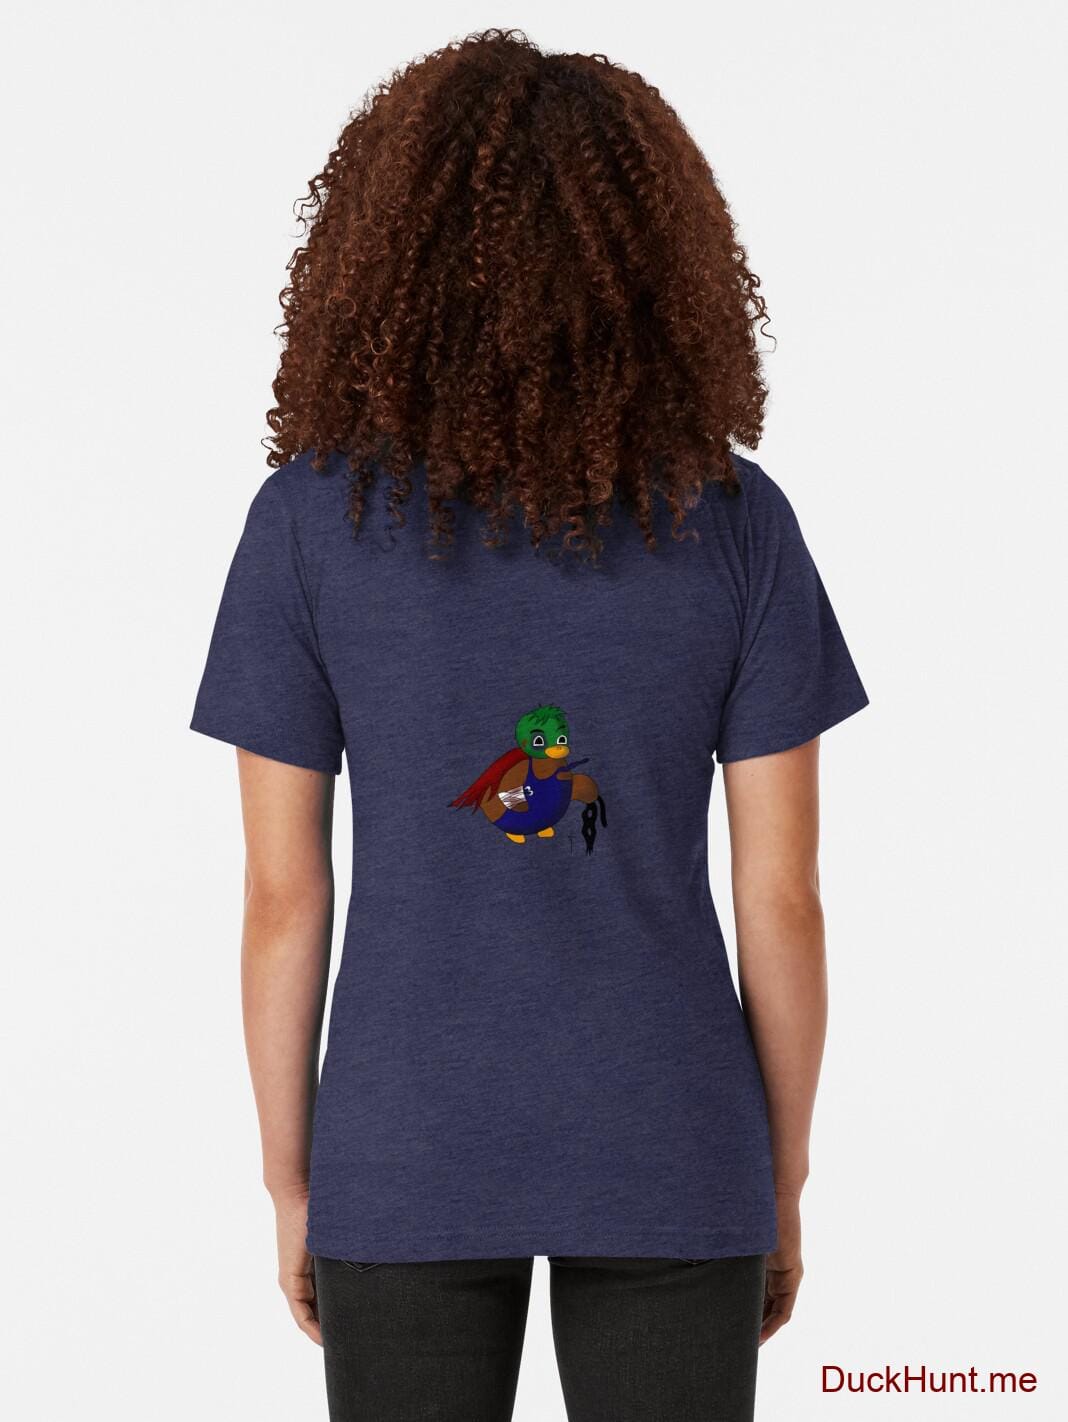 Dead DuckHunt Boss (smokeless) Navy Tri-blend T-Shirt (Back printed) alternative image 1